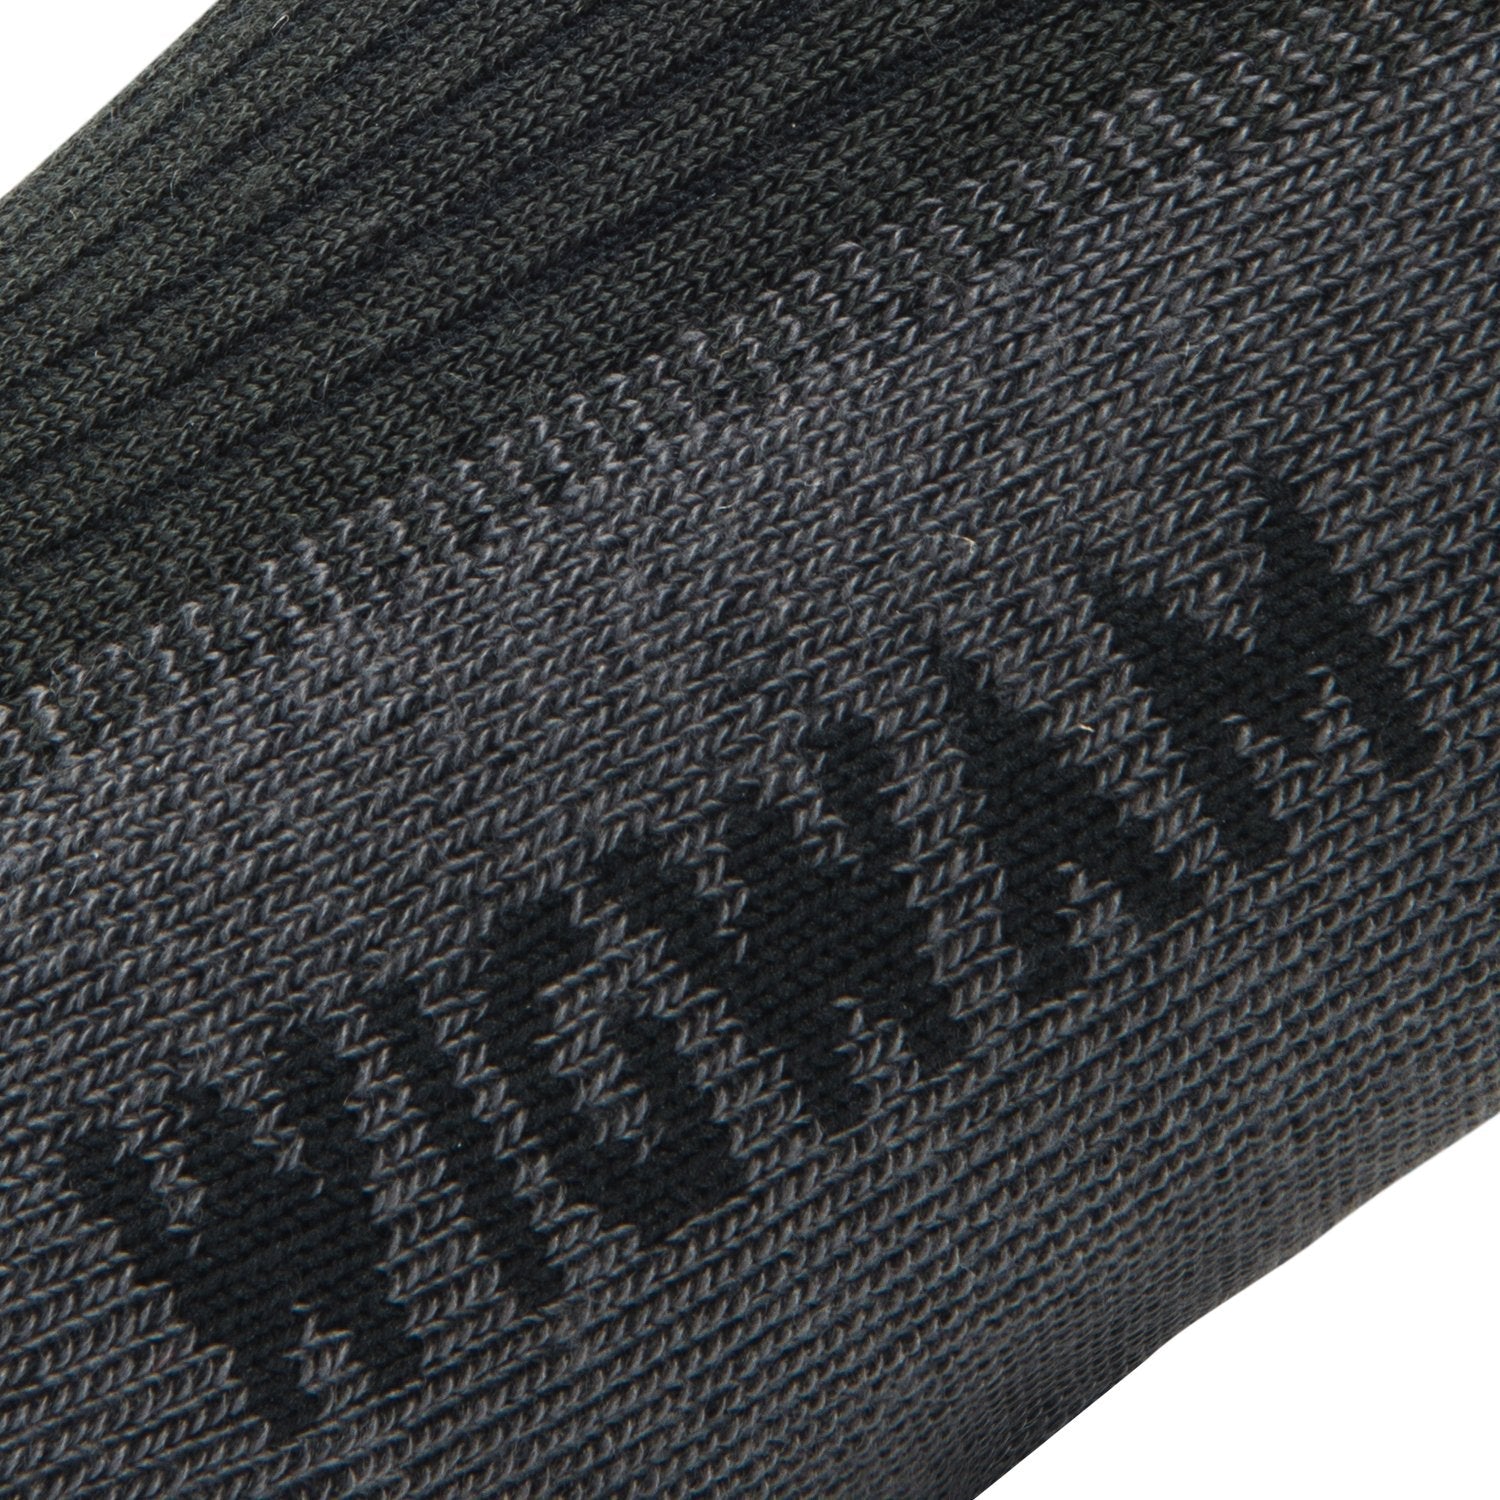 Thunder Low Lightweight Sock - Black knit-in logo - made in The USA Wigwam Socks